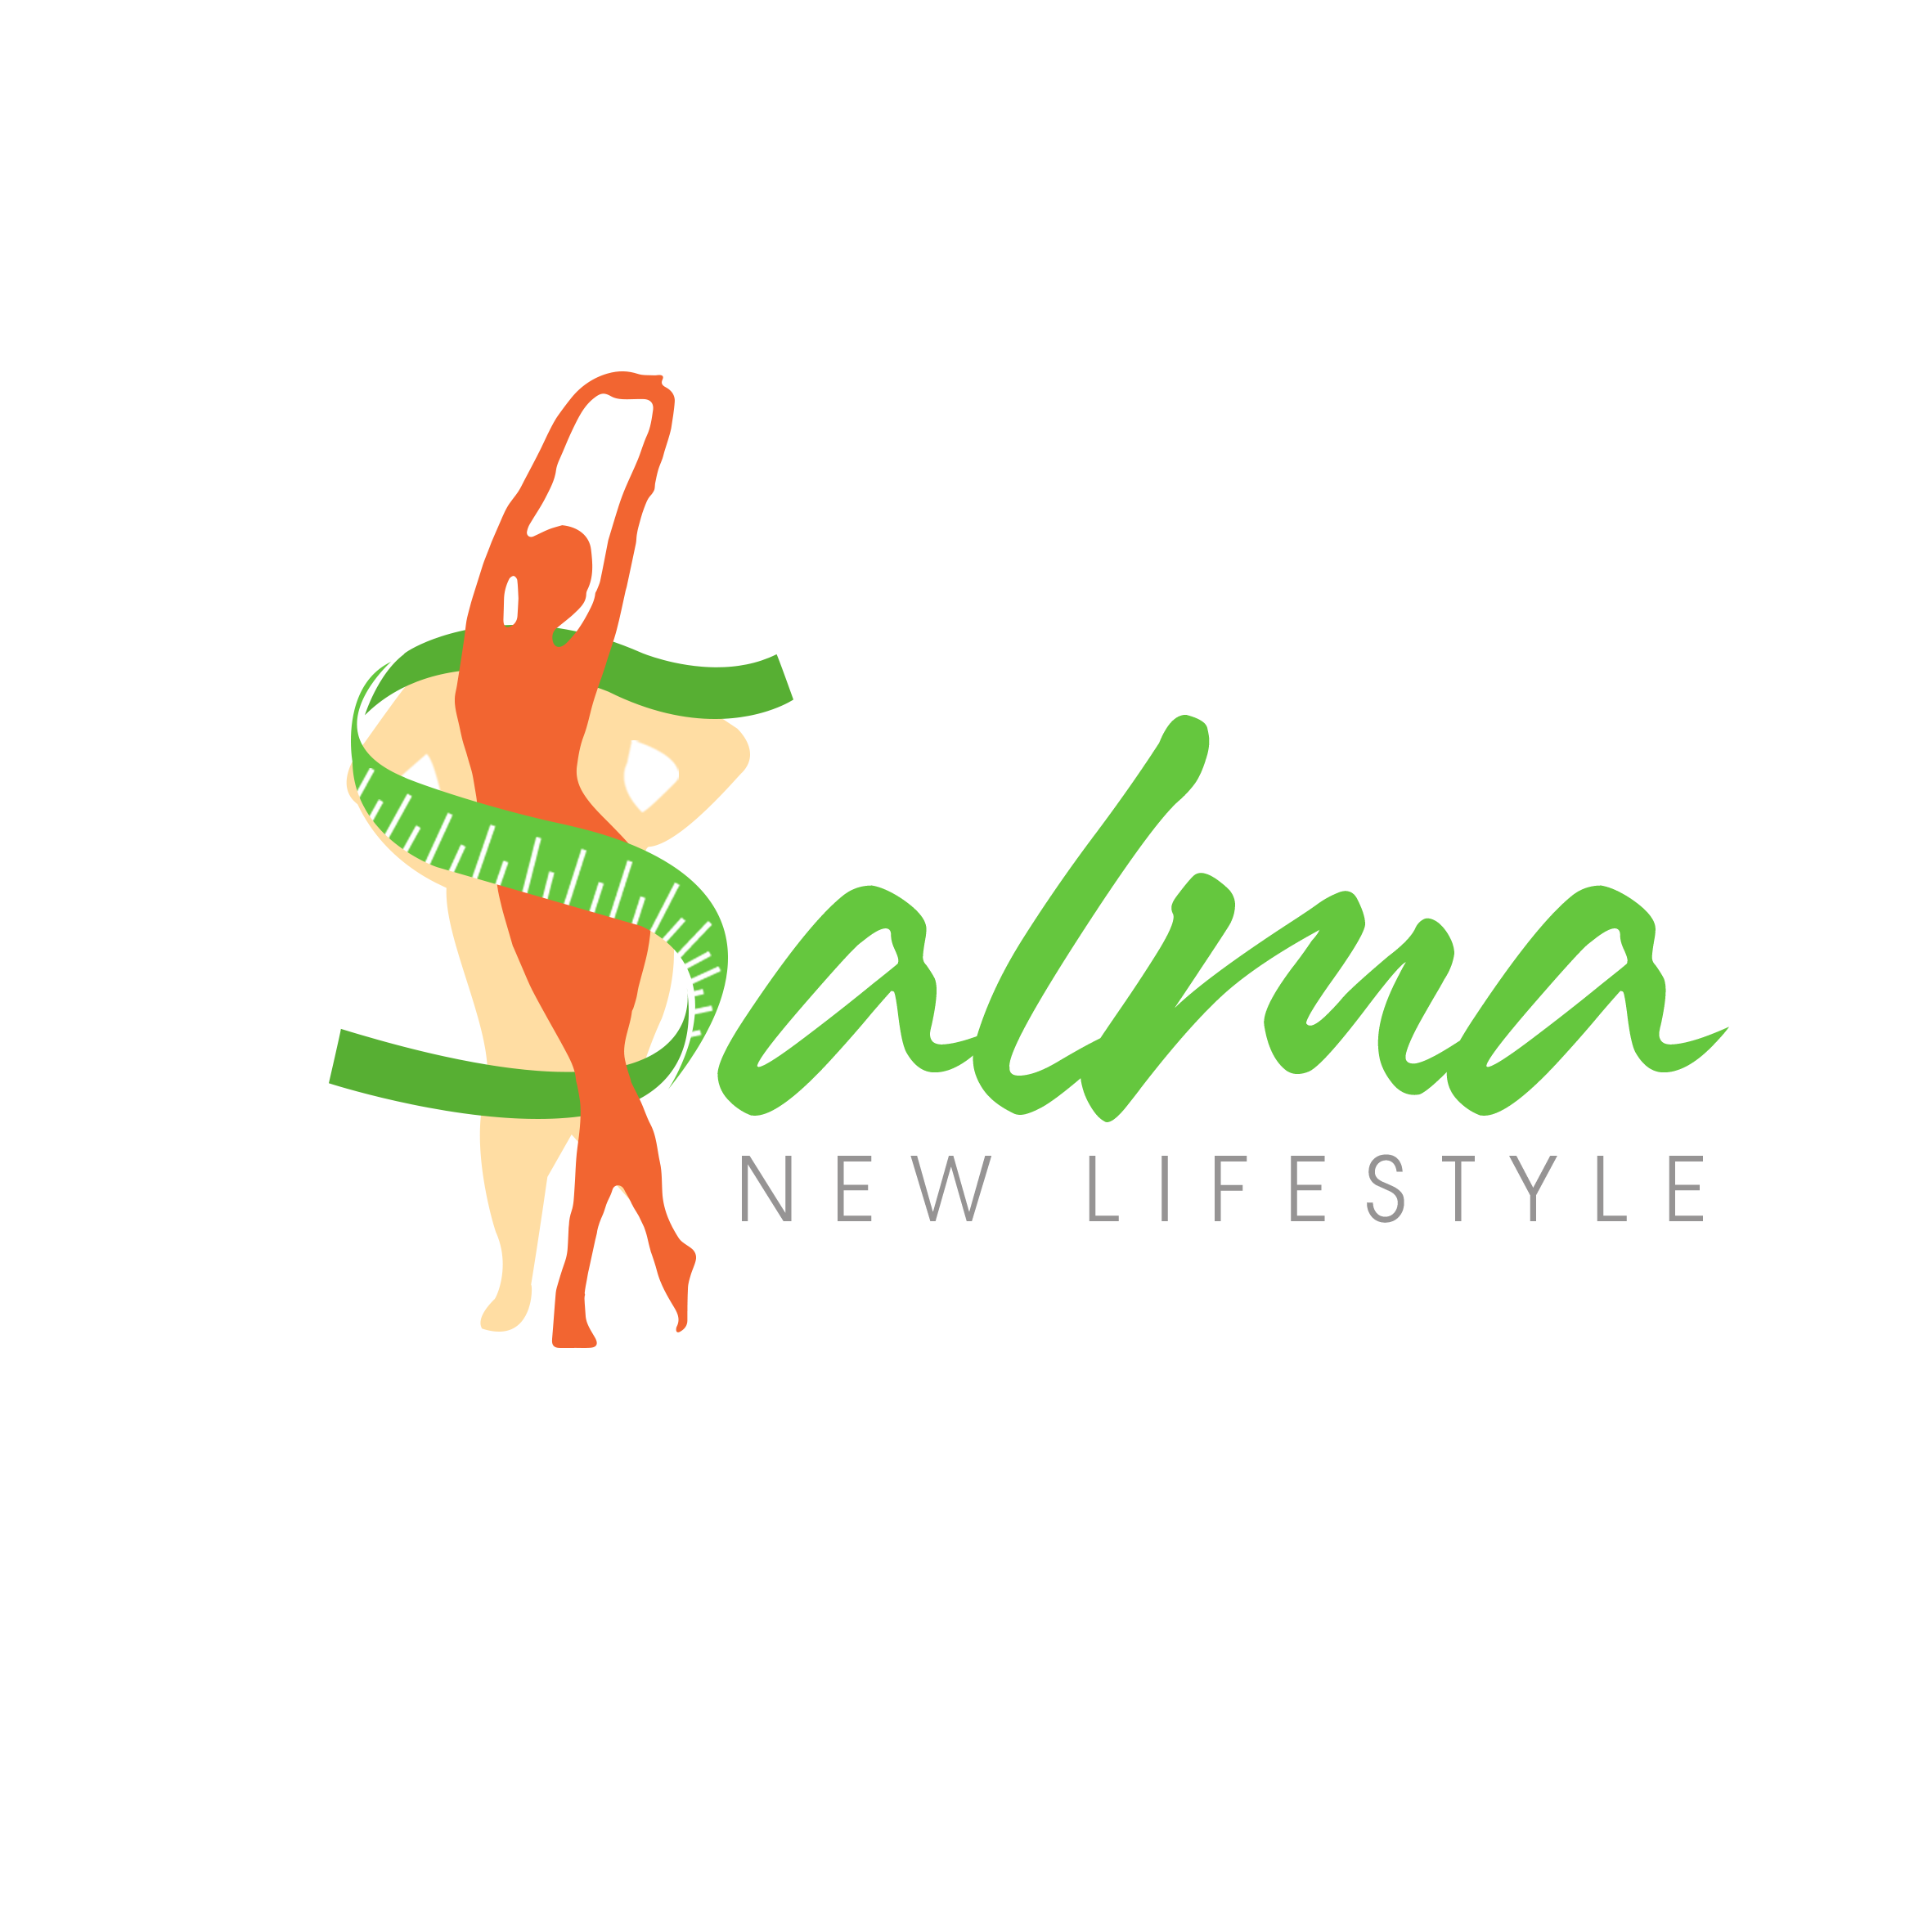 Salma New Life Style Logo